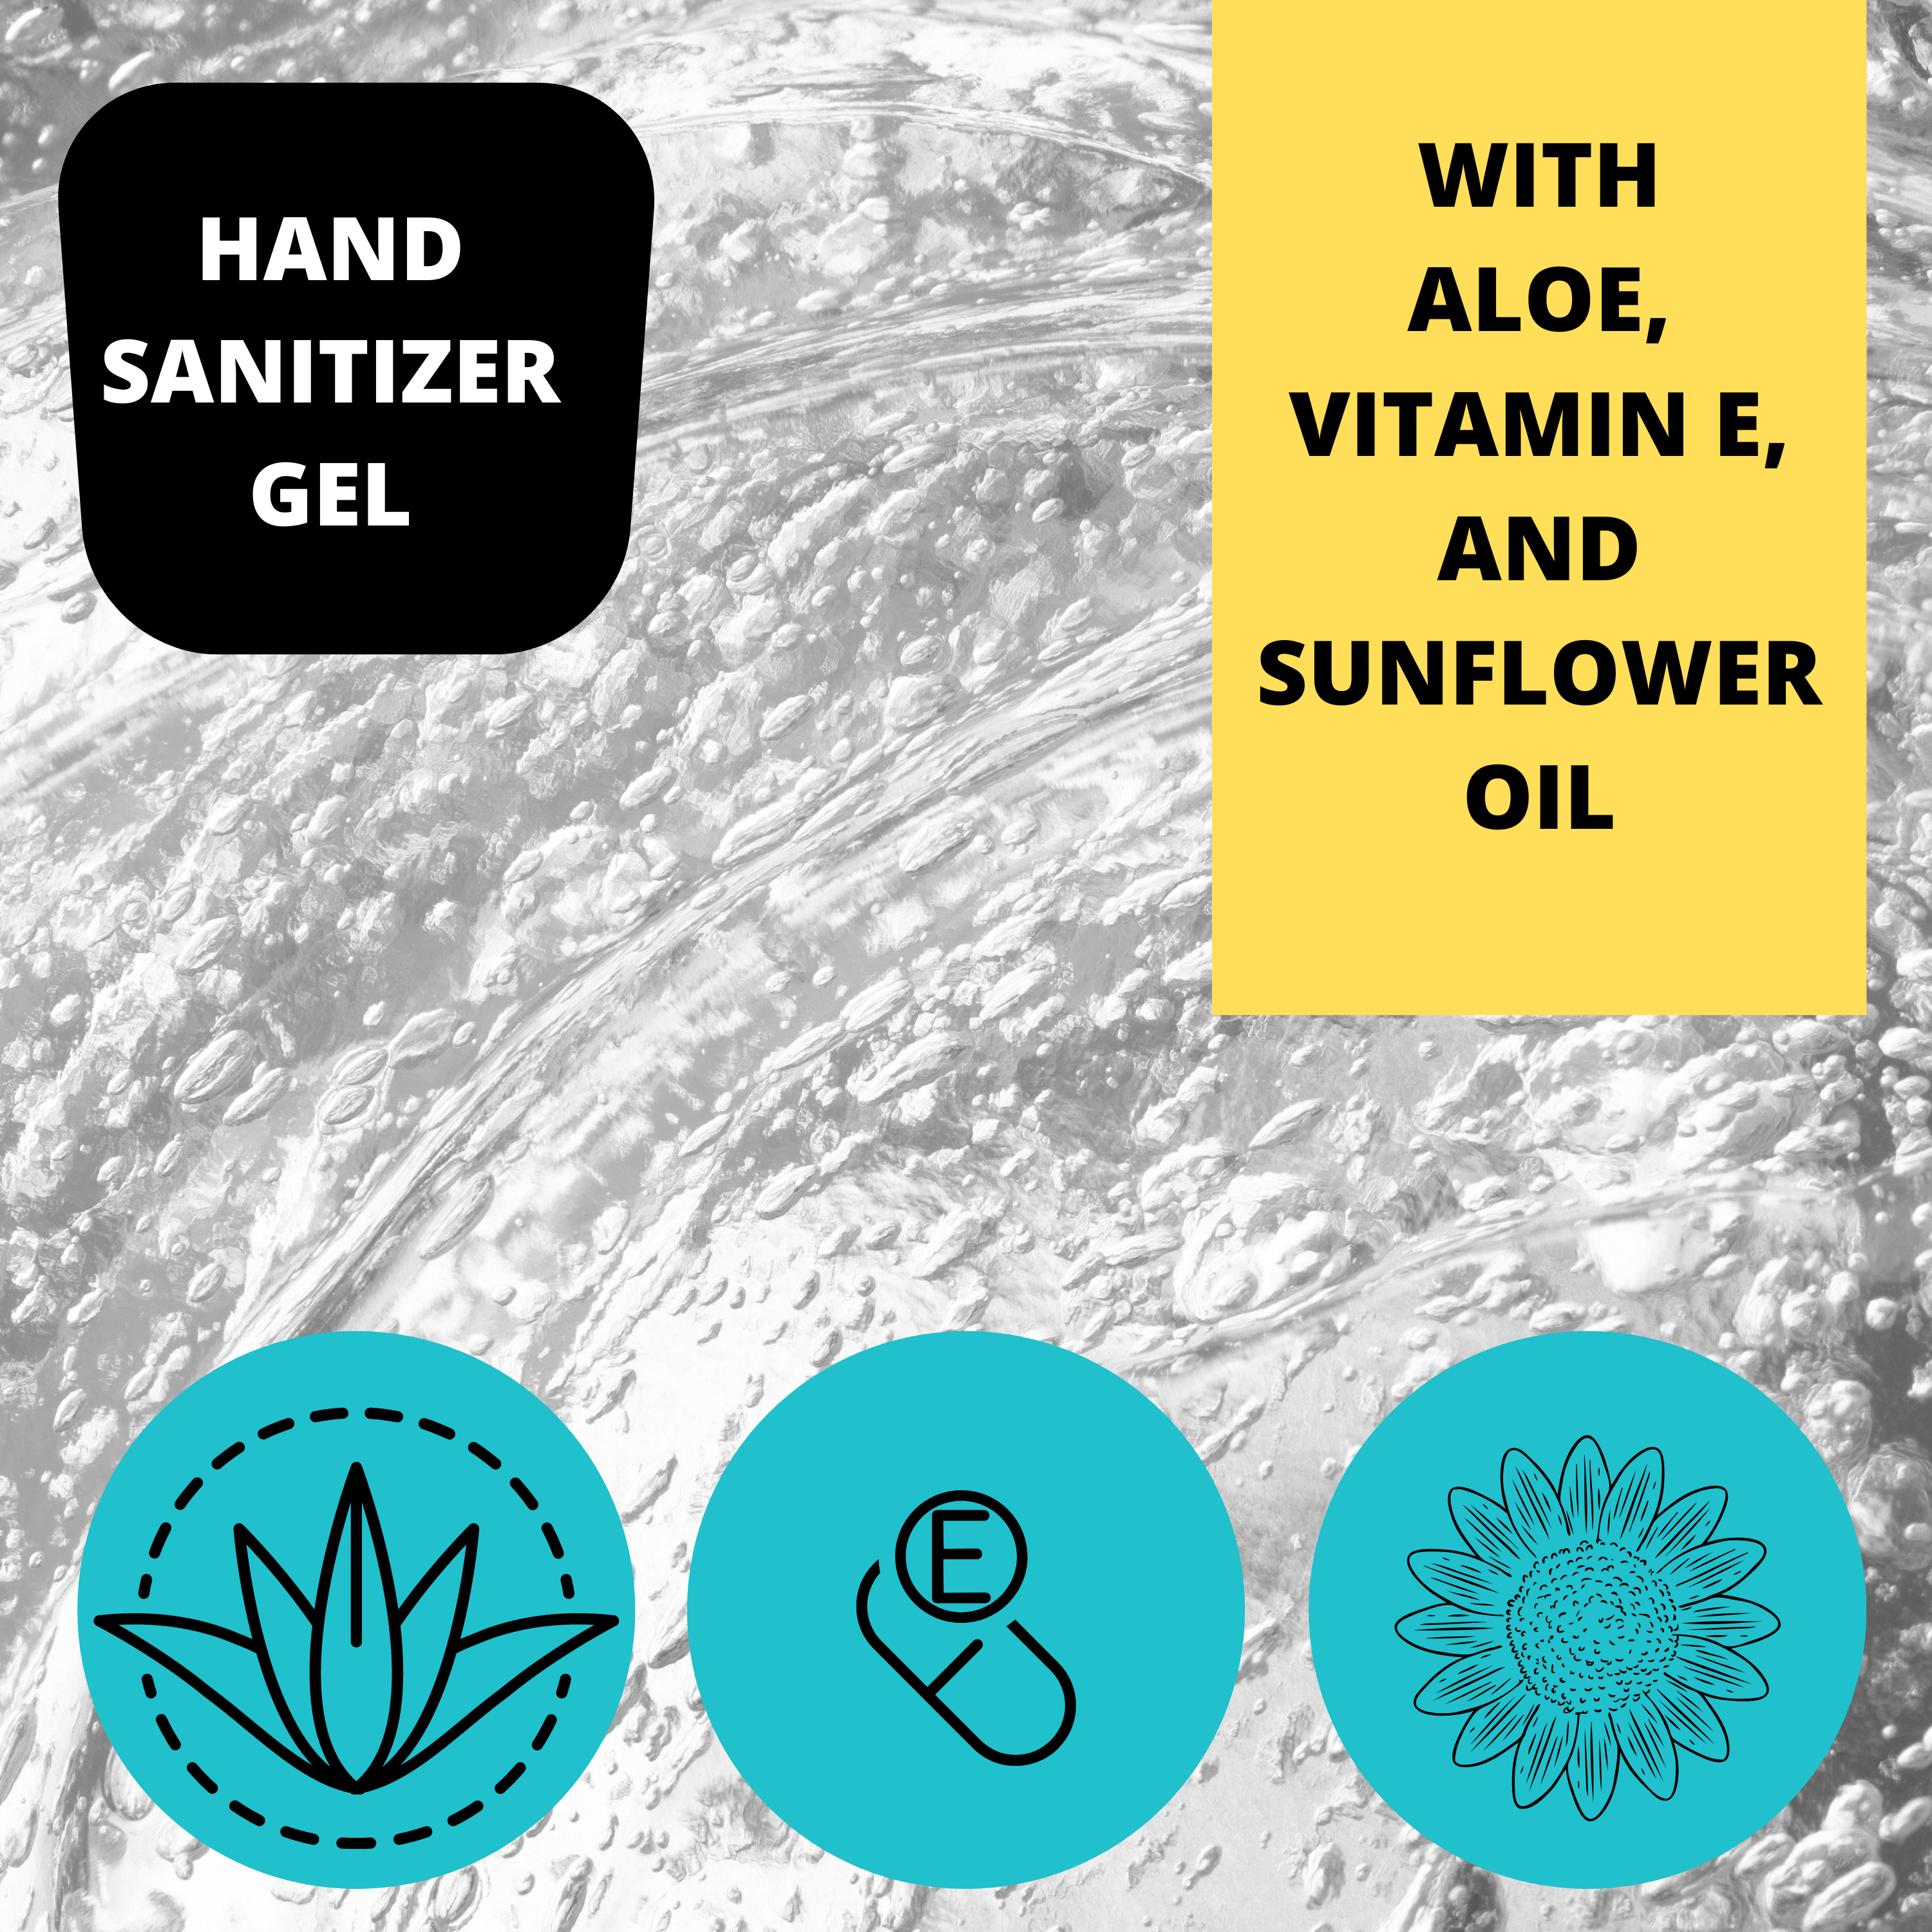 Black Canyon Orangesicle Scented Hand Sanitizer Gel